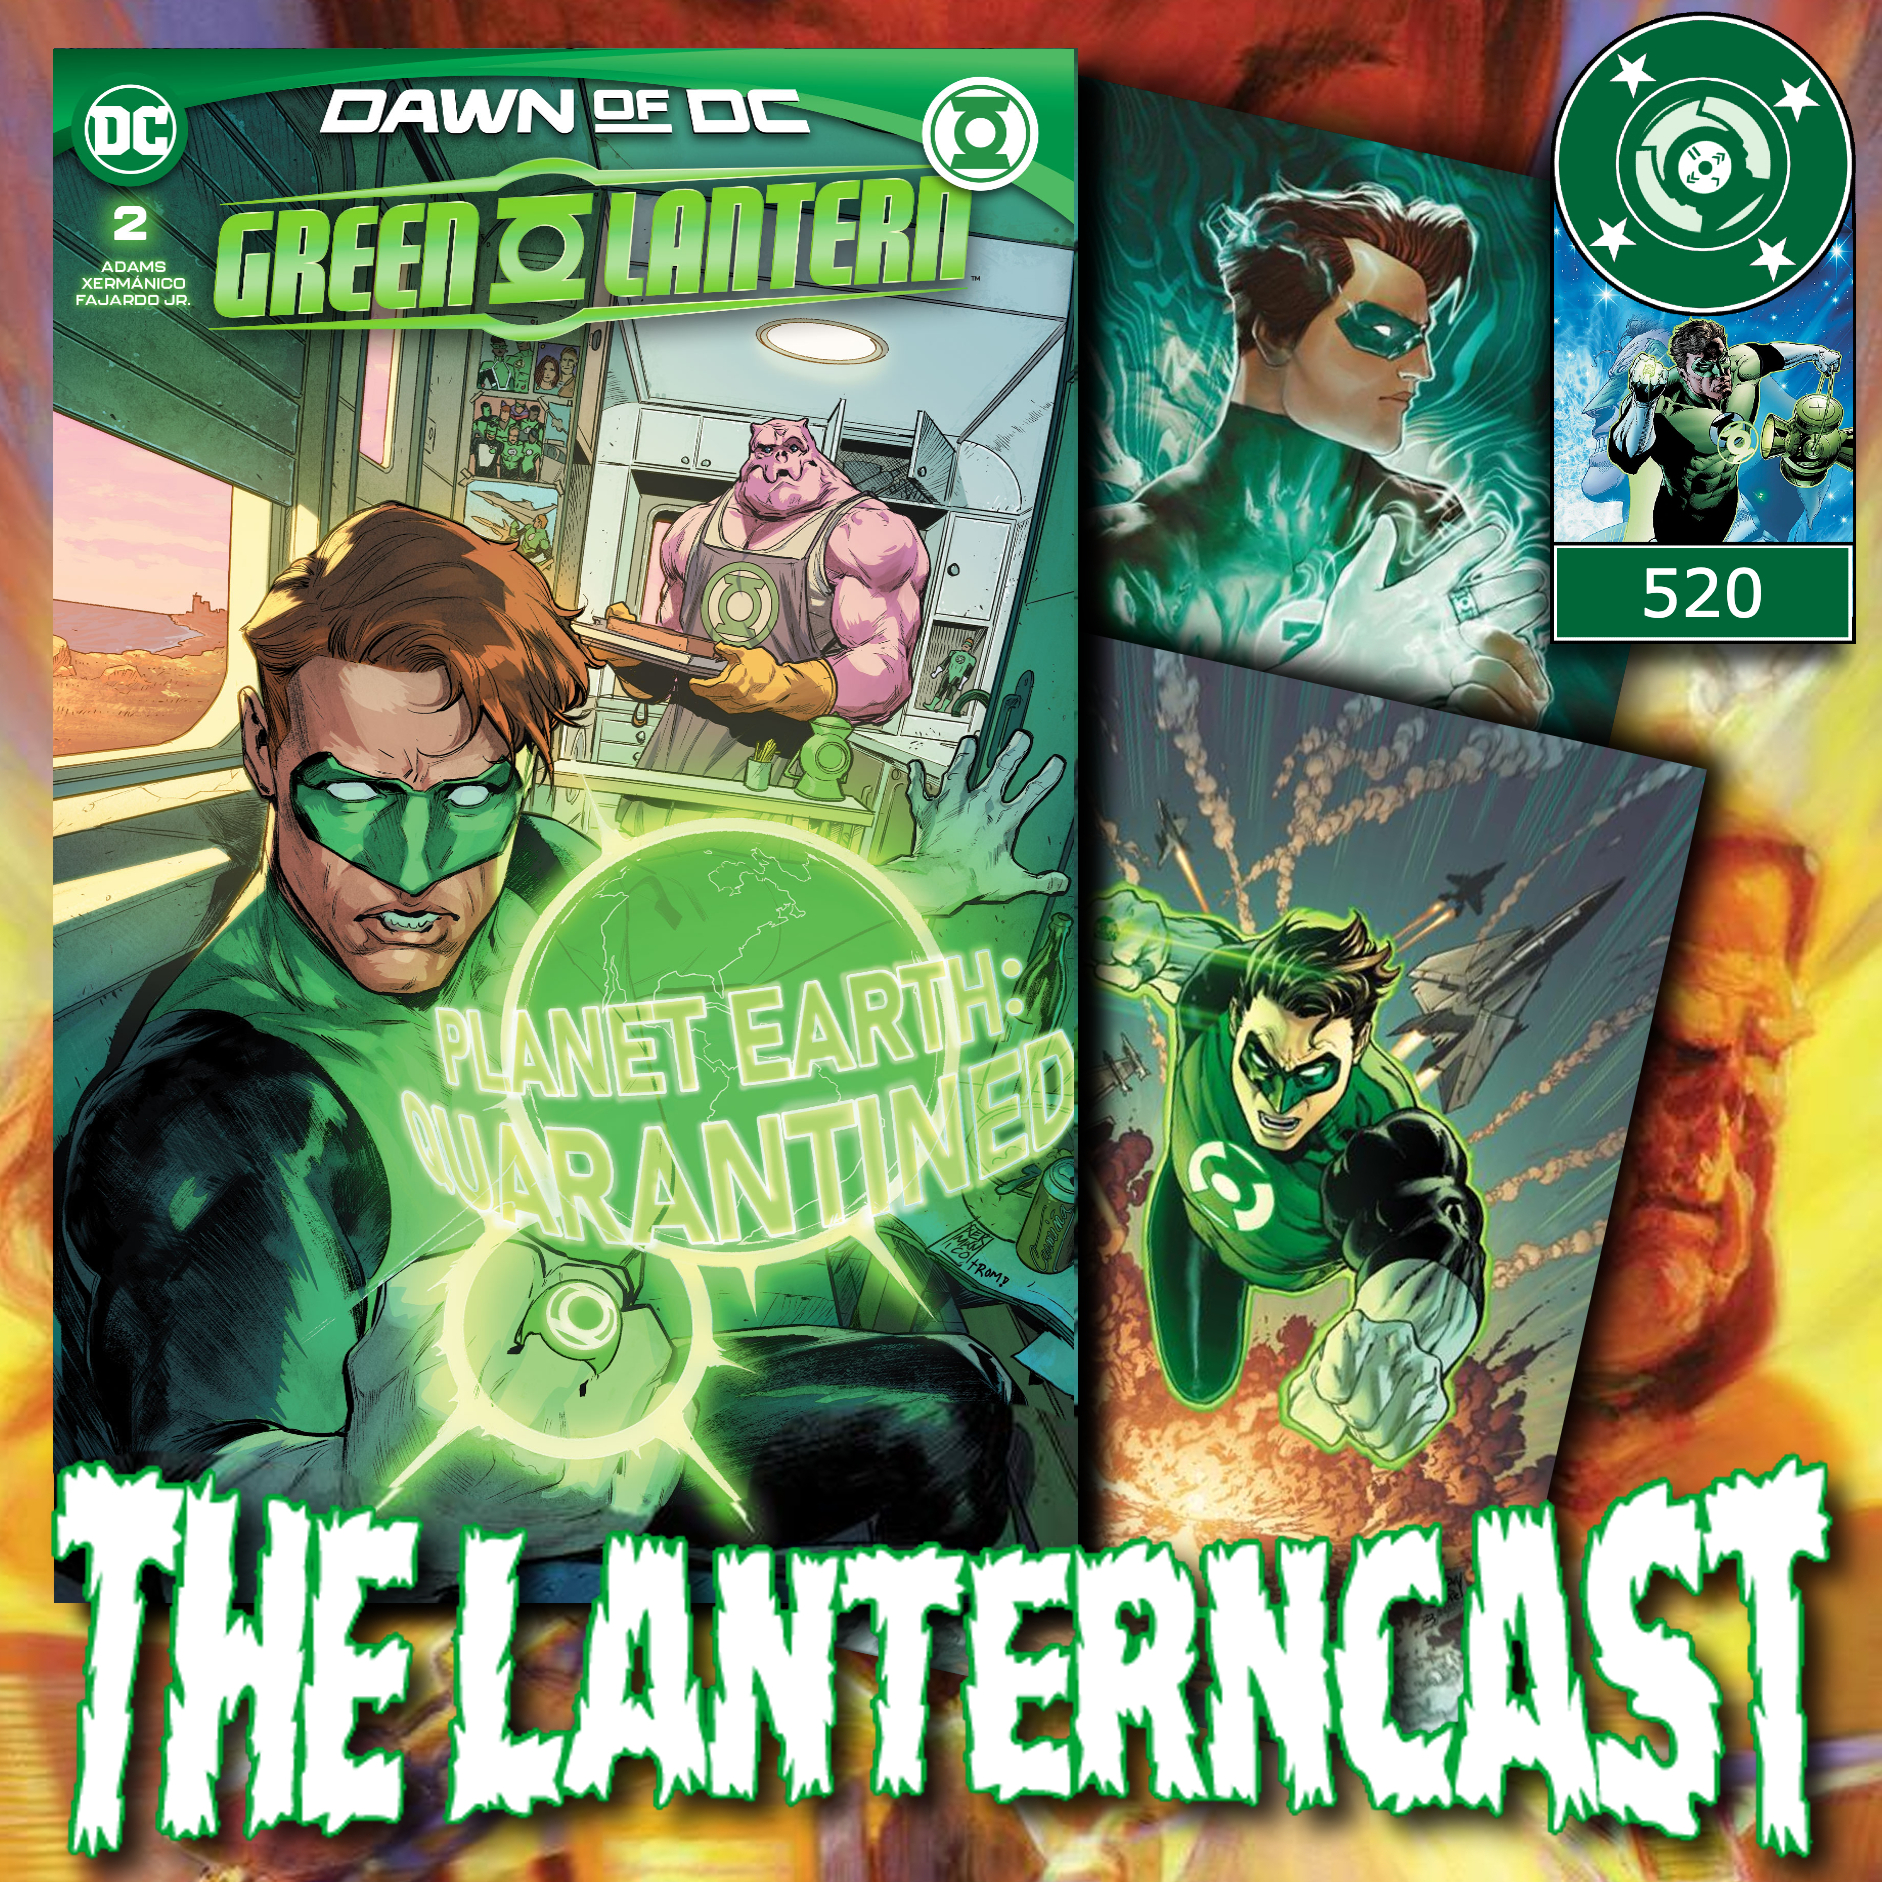 USA Paradise pasta LanternCast Episode #520- Green Lantern #2!